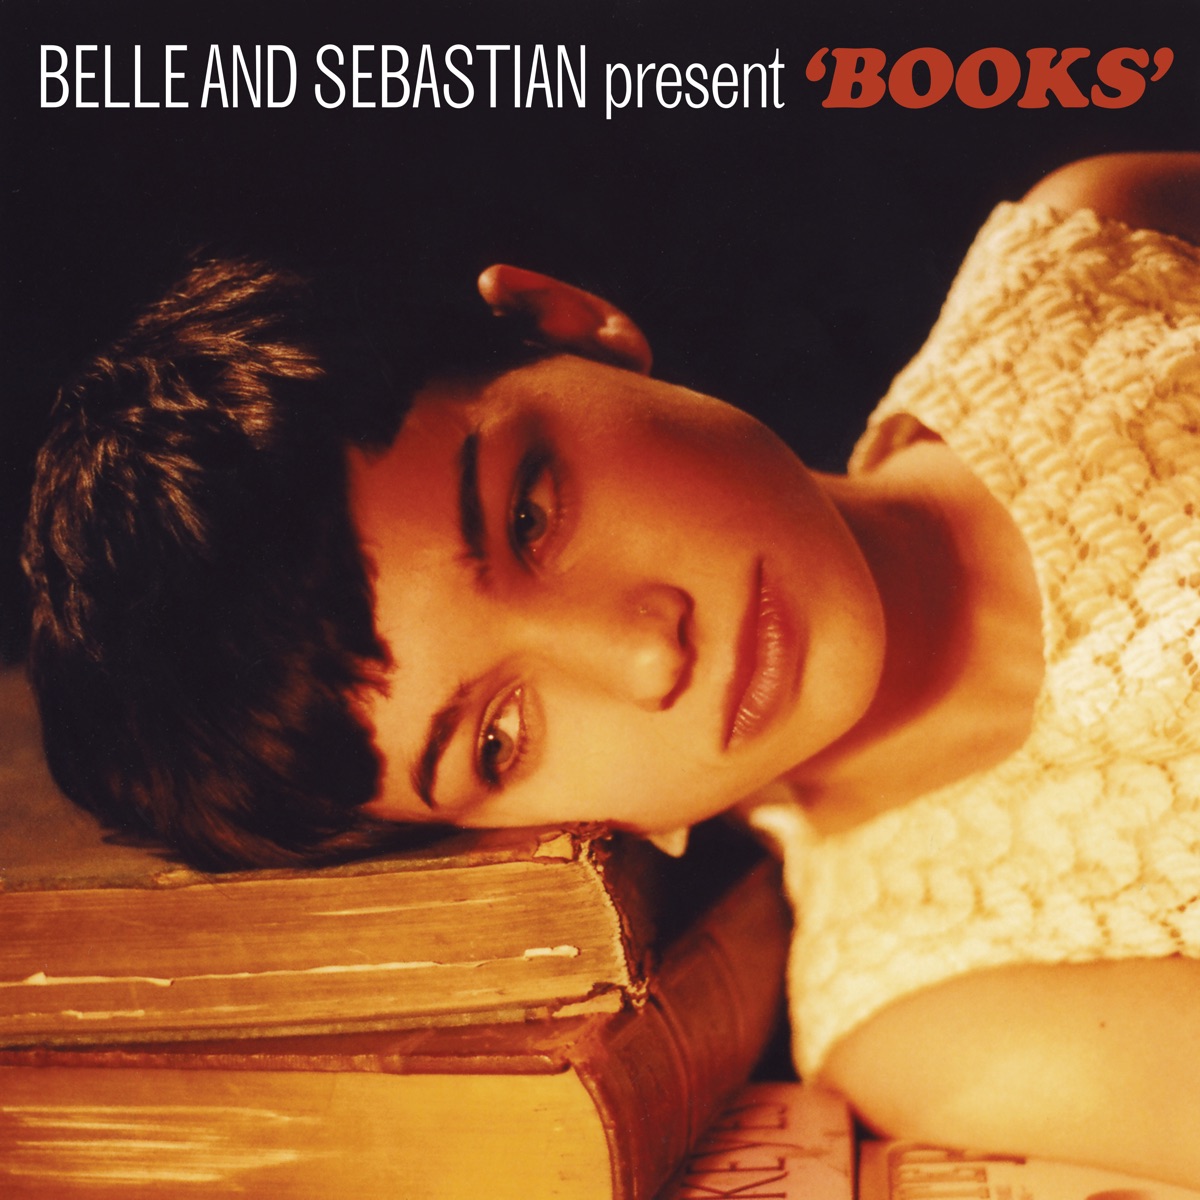 Tigermilk - Album by Belle and Sebastian - Apple Music